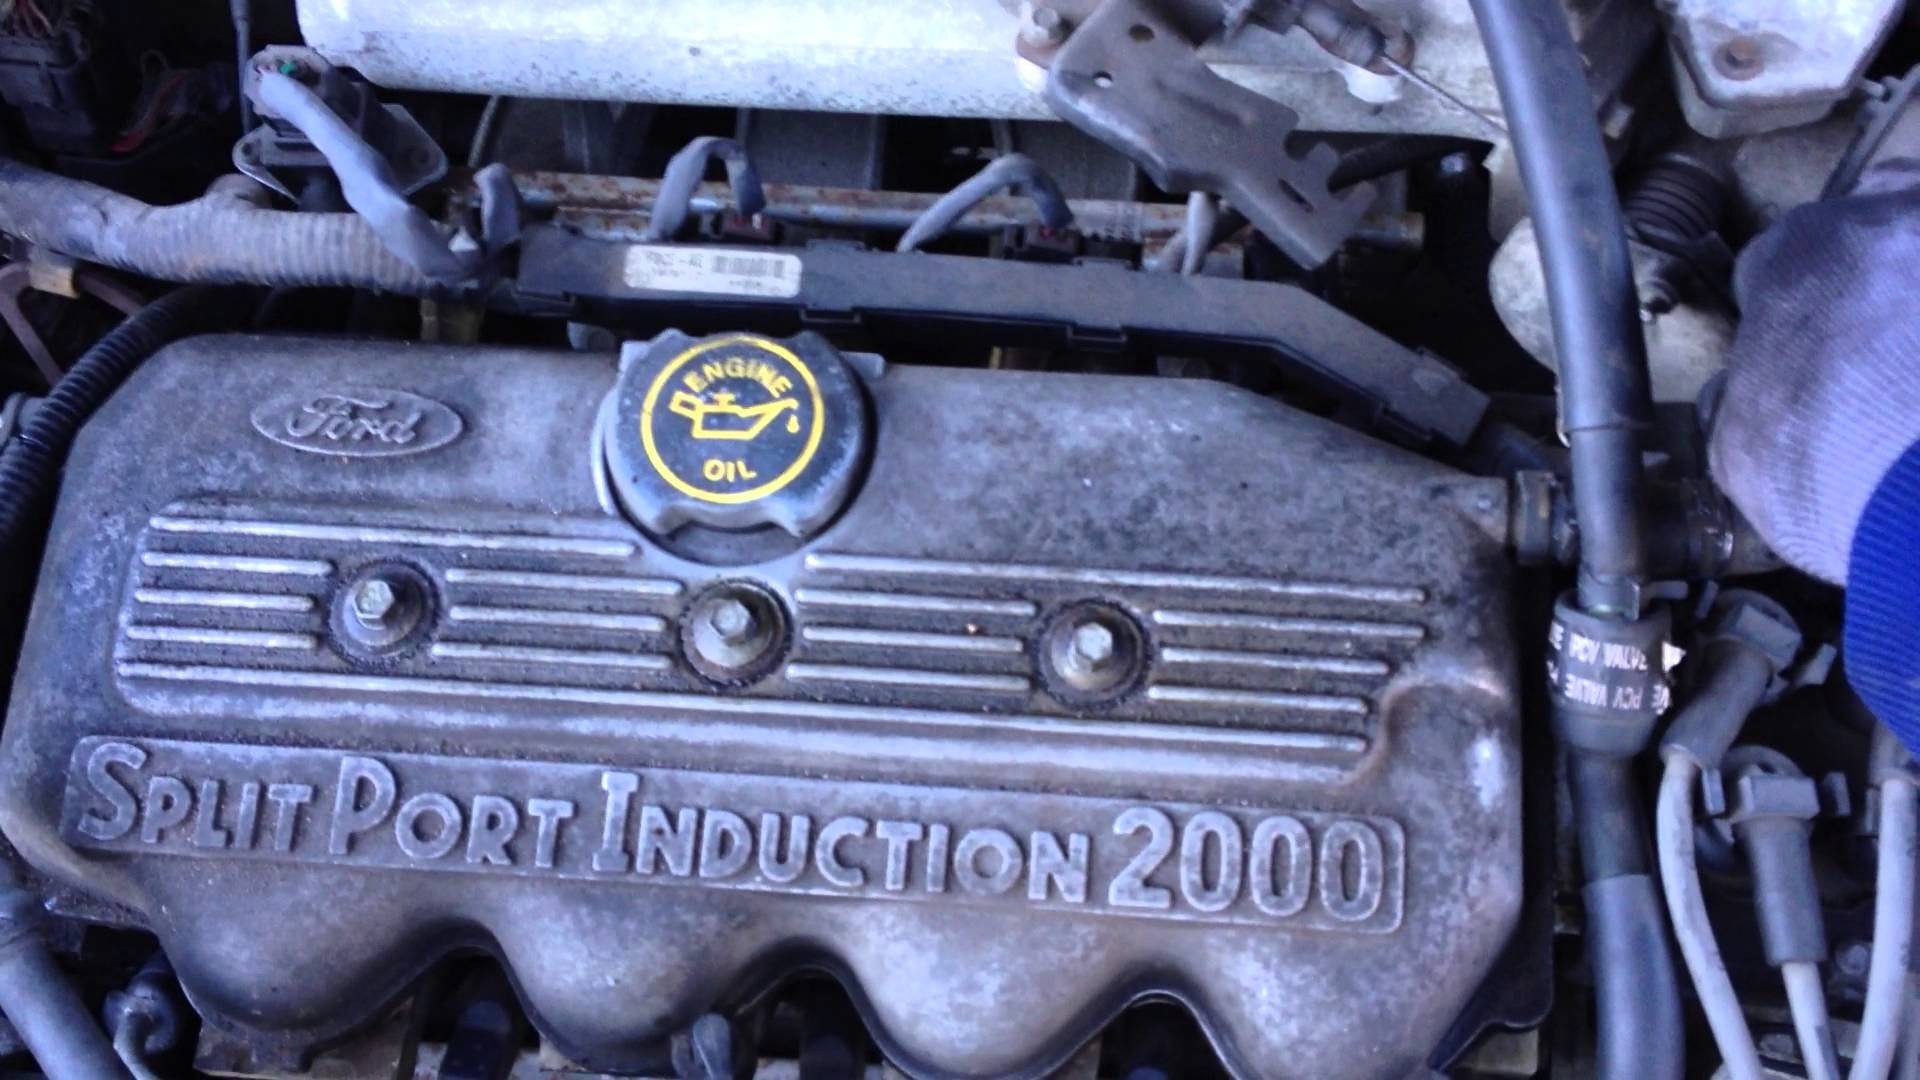 Ford Escort 1998 Engine Diagram ford Escort 1998 Knocking Engine Help Of Ford Escort 1998 Engine Diagram